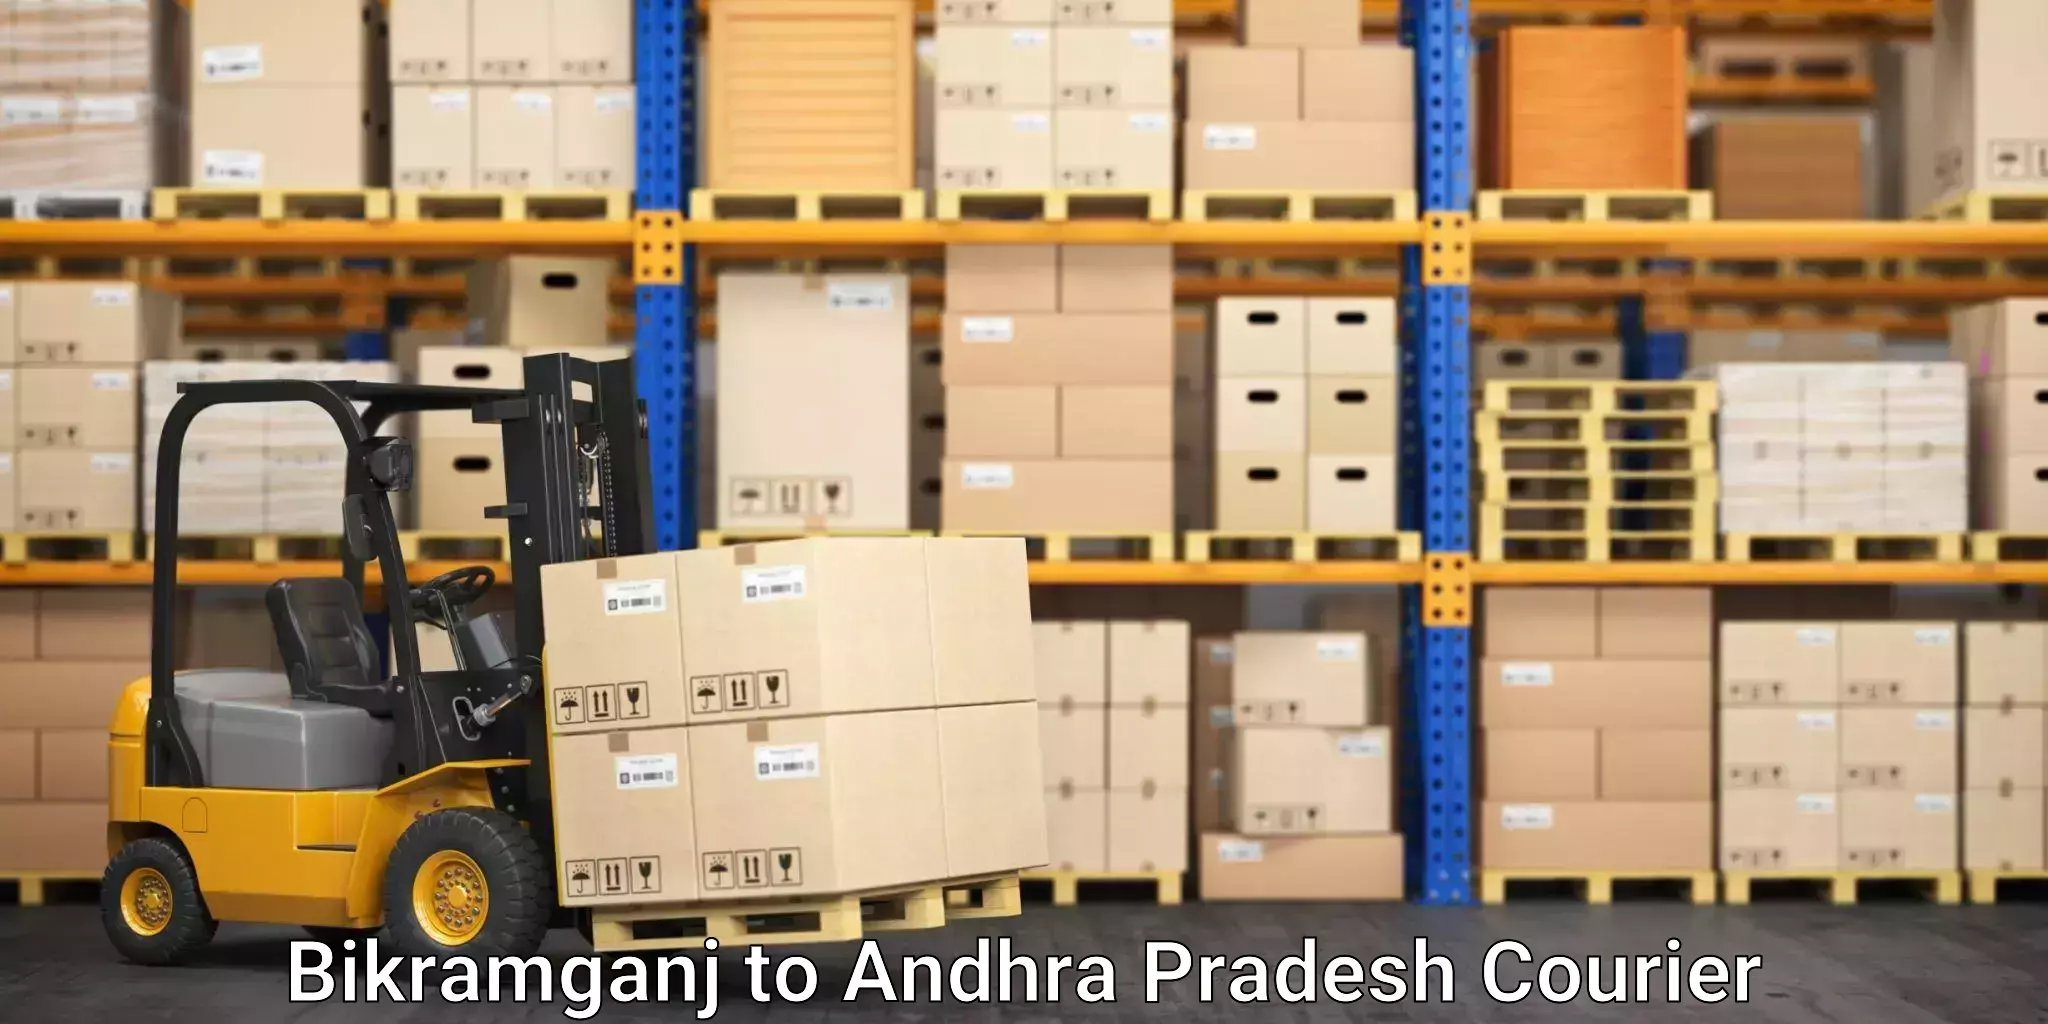 Moving and storage services Bikramganj to Pamuru